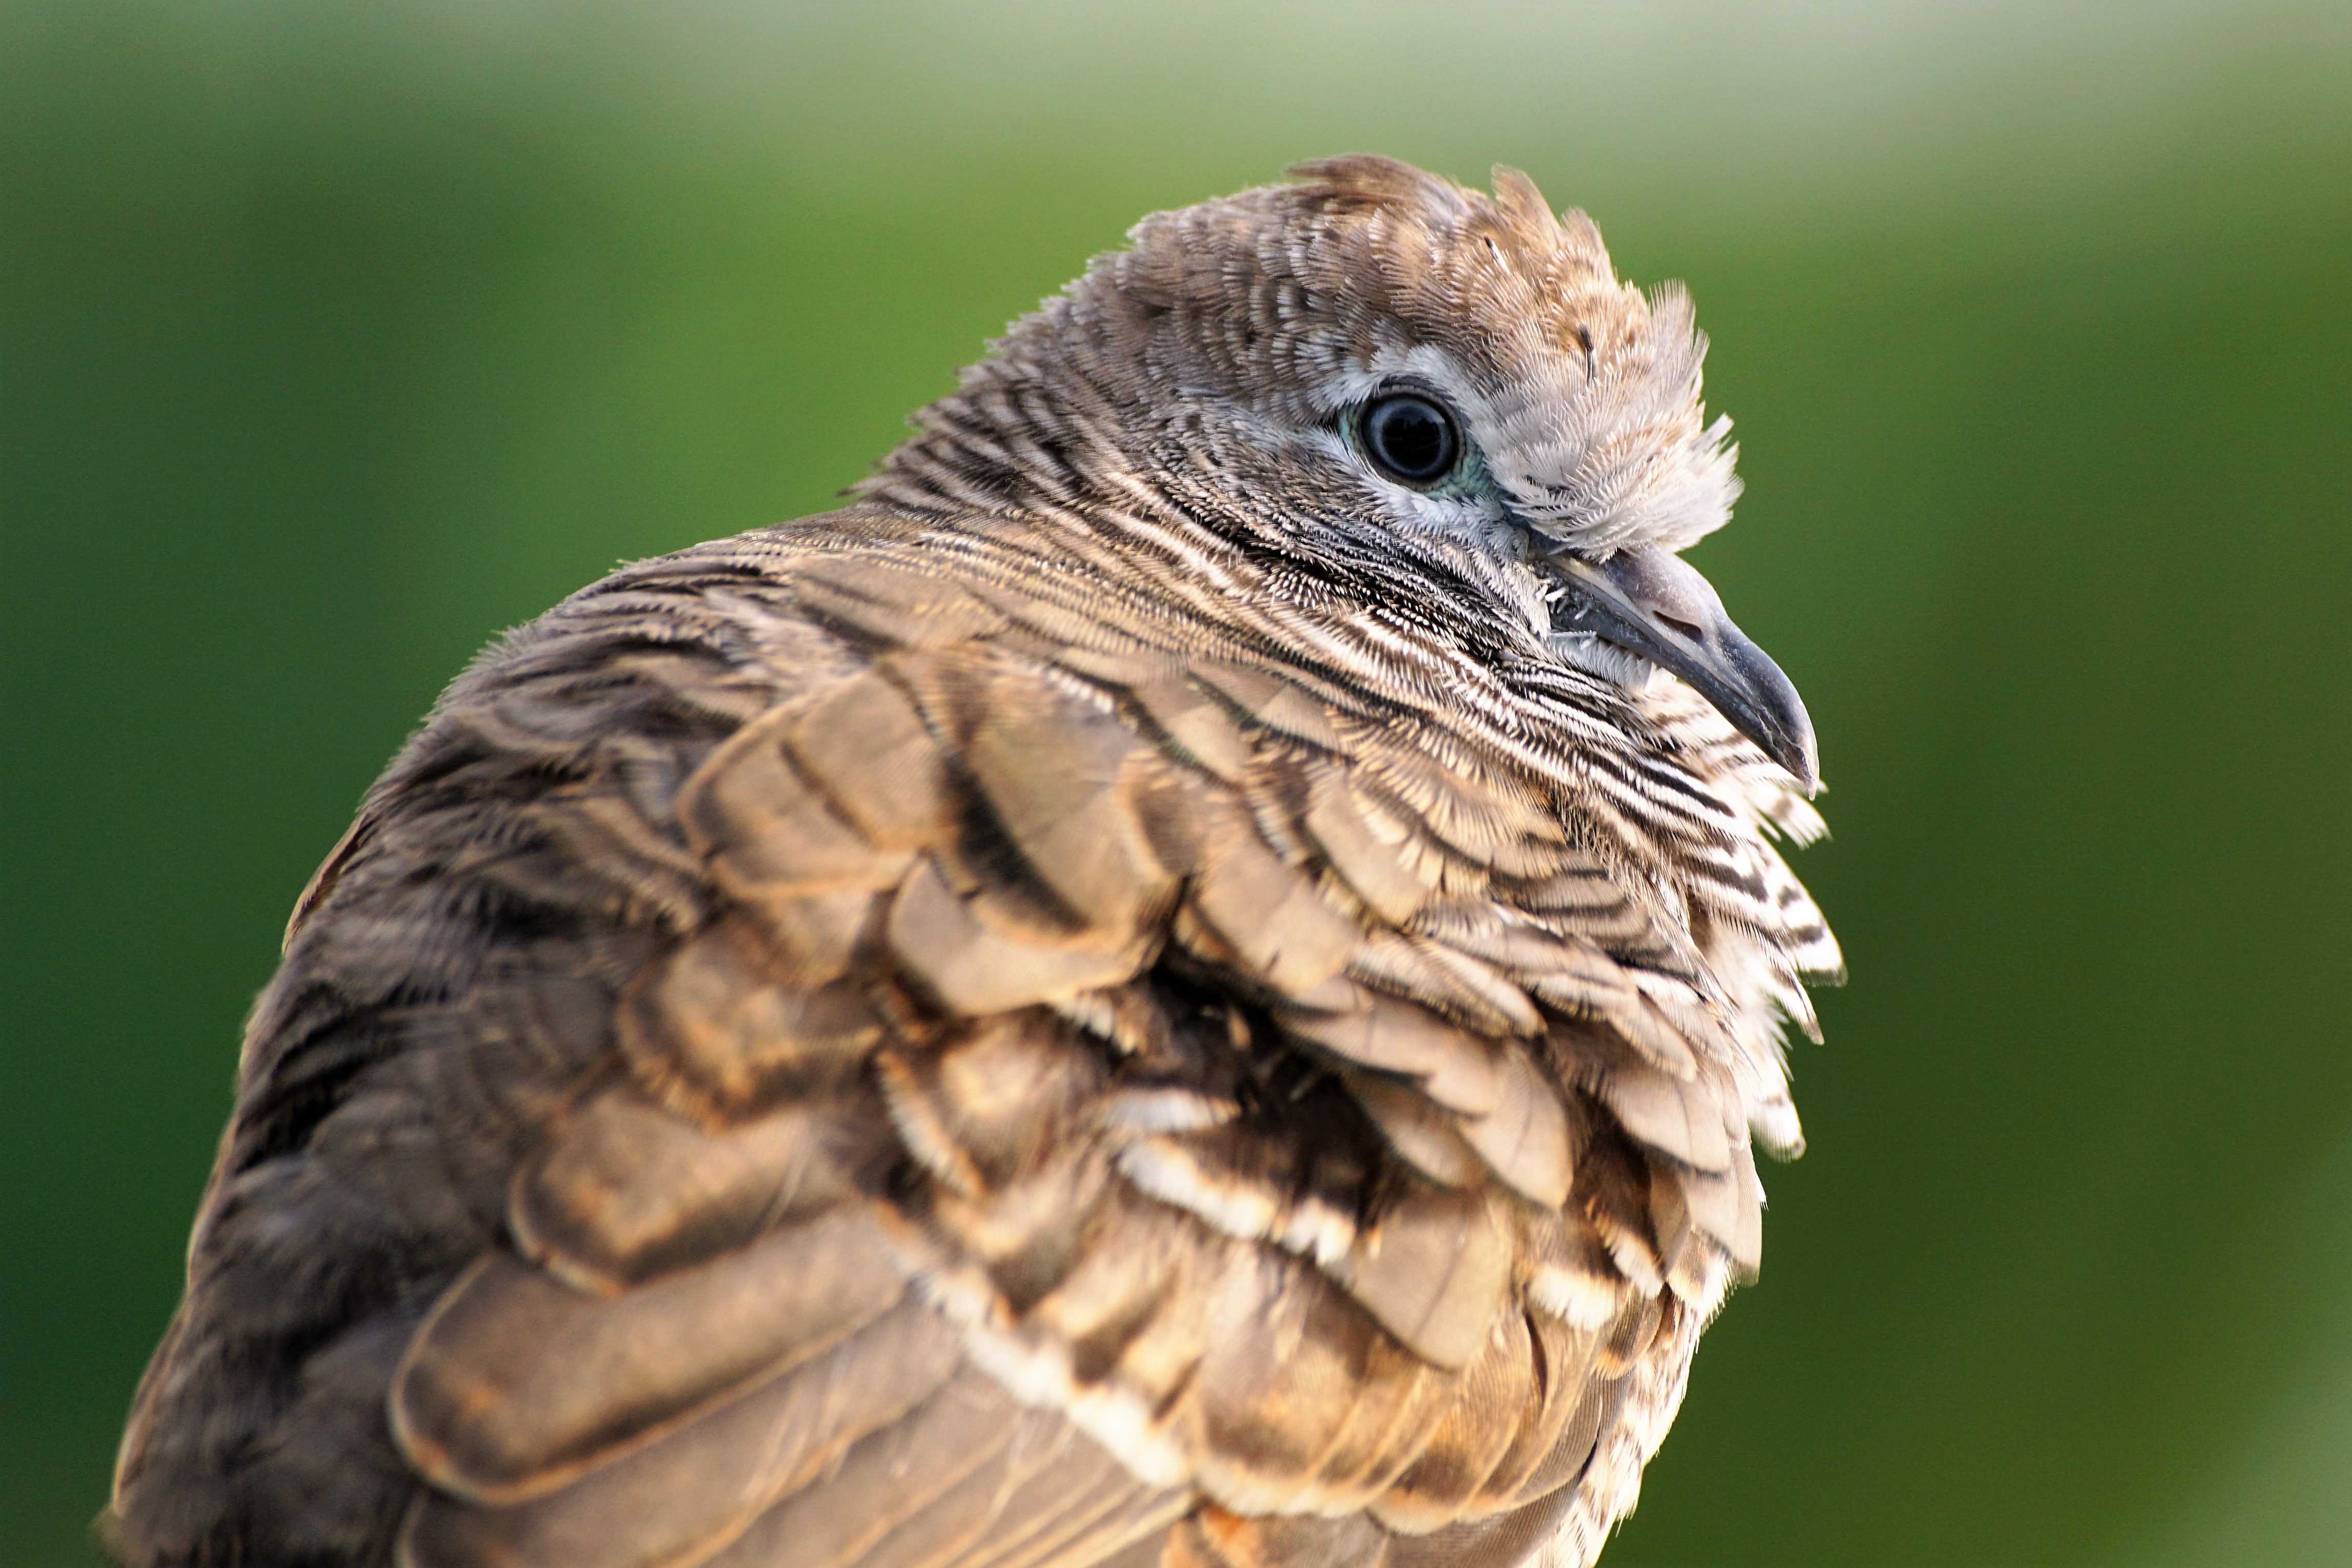 Brown Bird Closeup image - Free stock photo - Public Domain photo ...